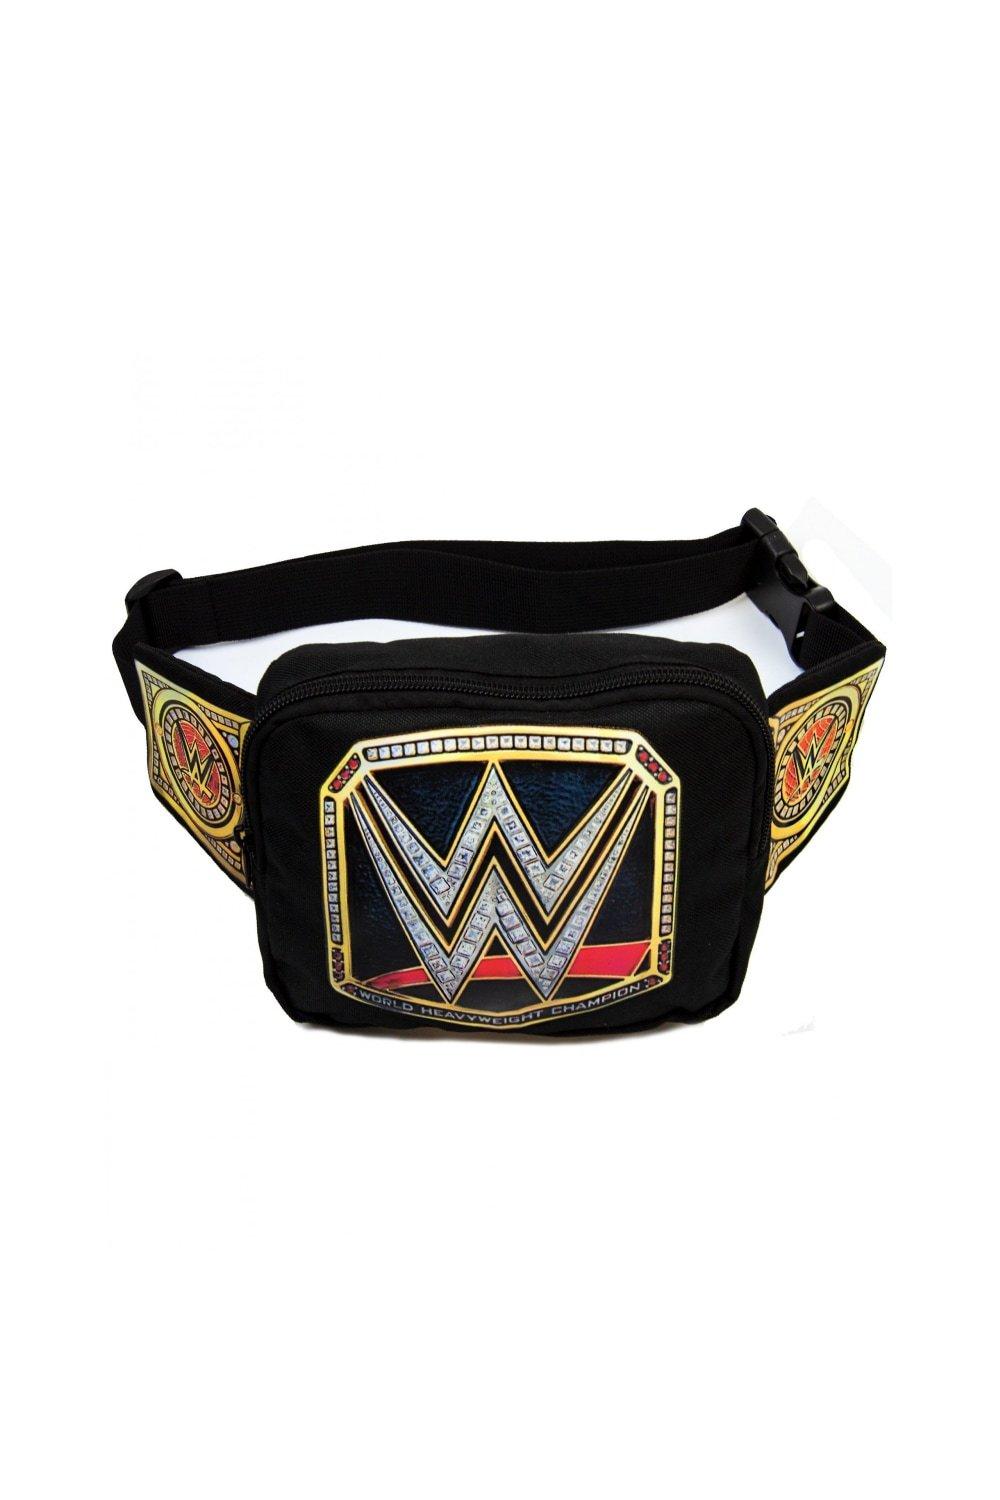 WWE Championship Title Belt Bum Bag|black